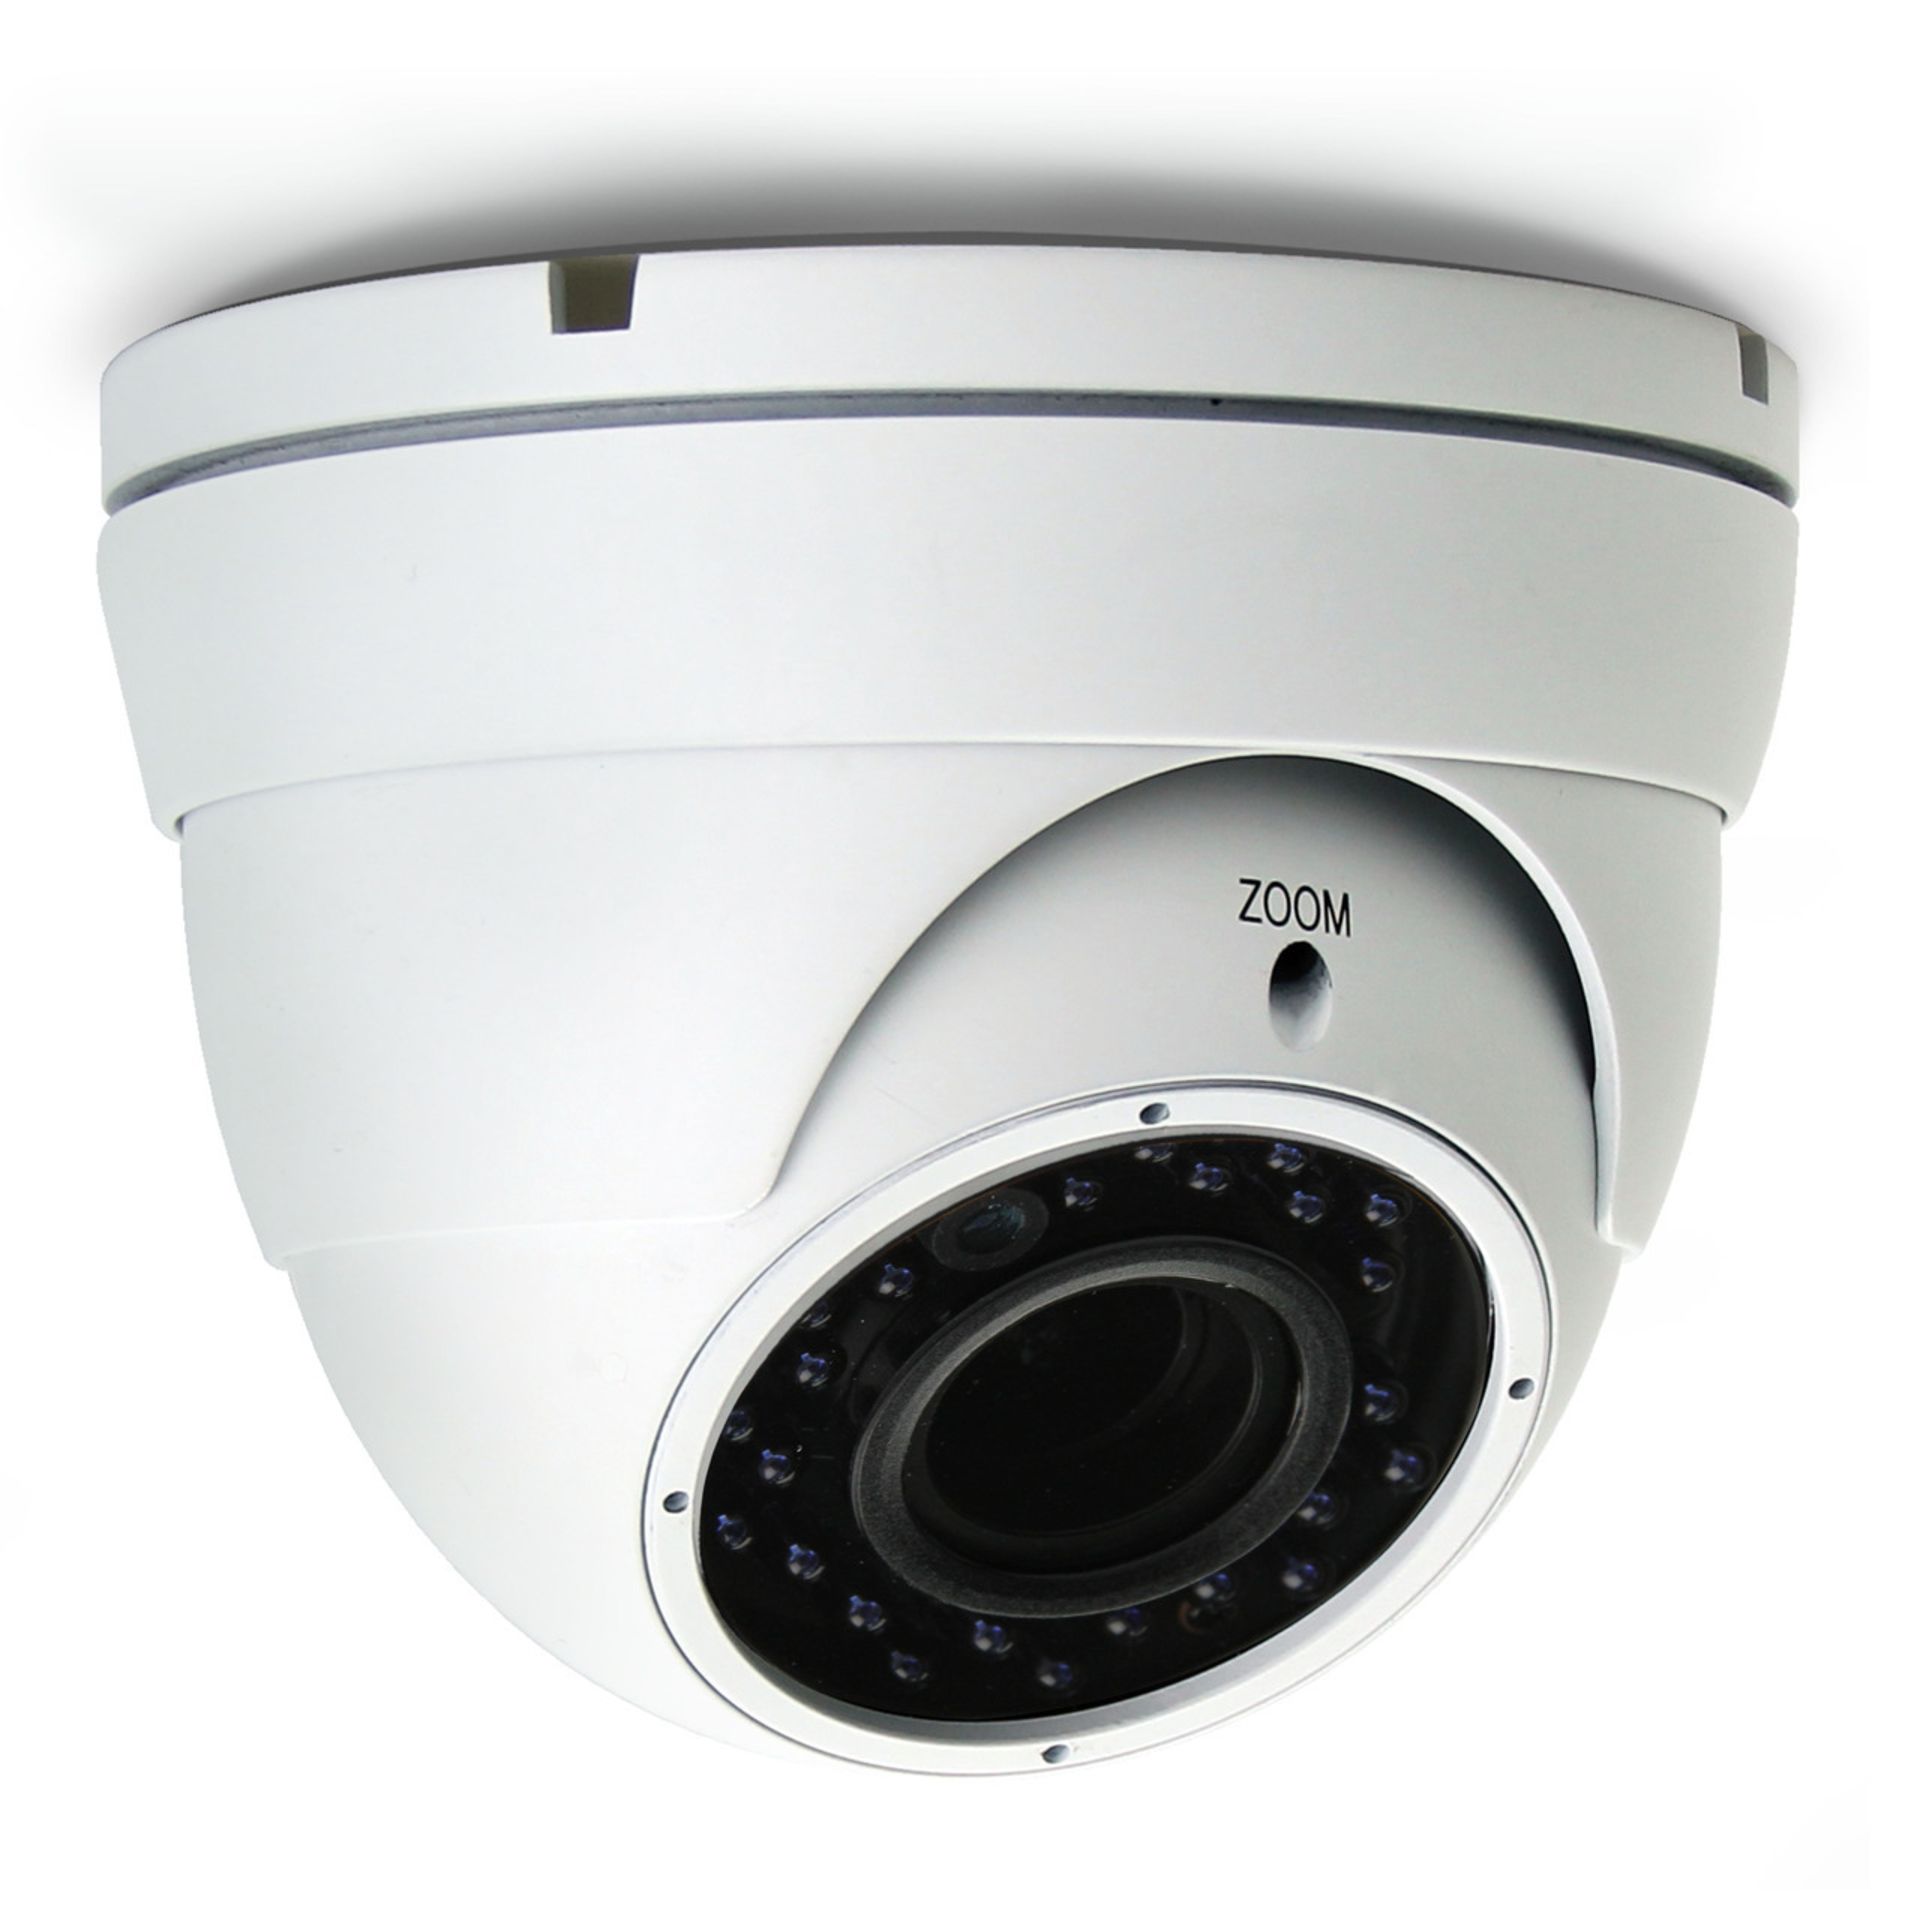 V Brand New Avtech Dome Camera - 1/3" Sony Super HAD 540TVL Lense - Online Price £99.99 (Ebay) -